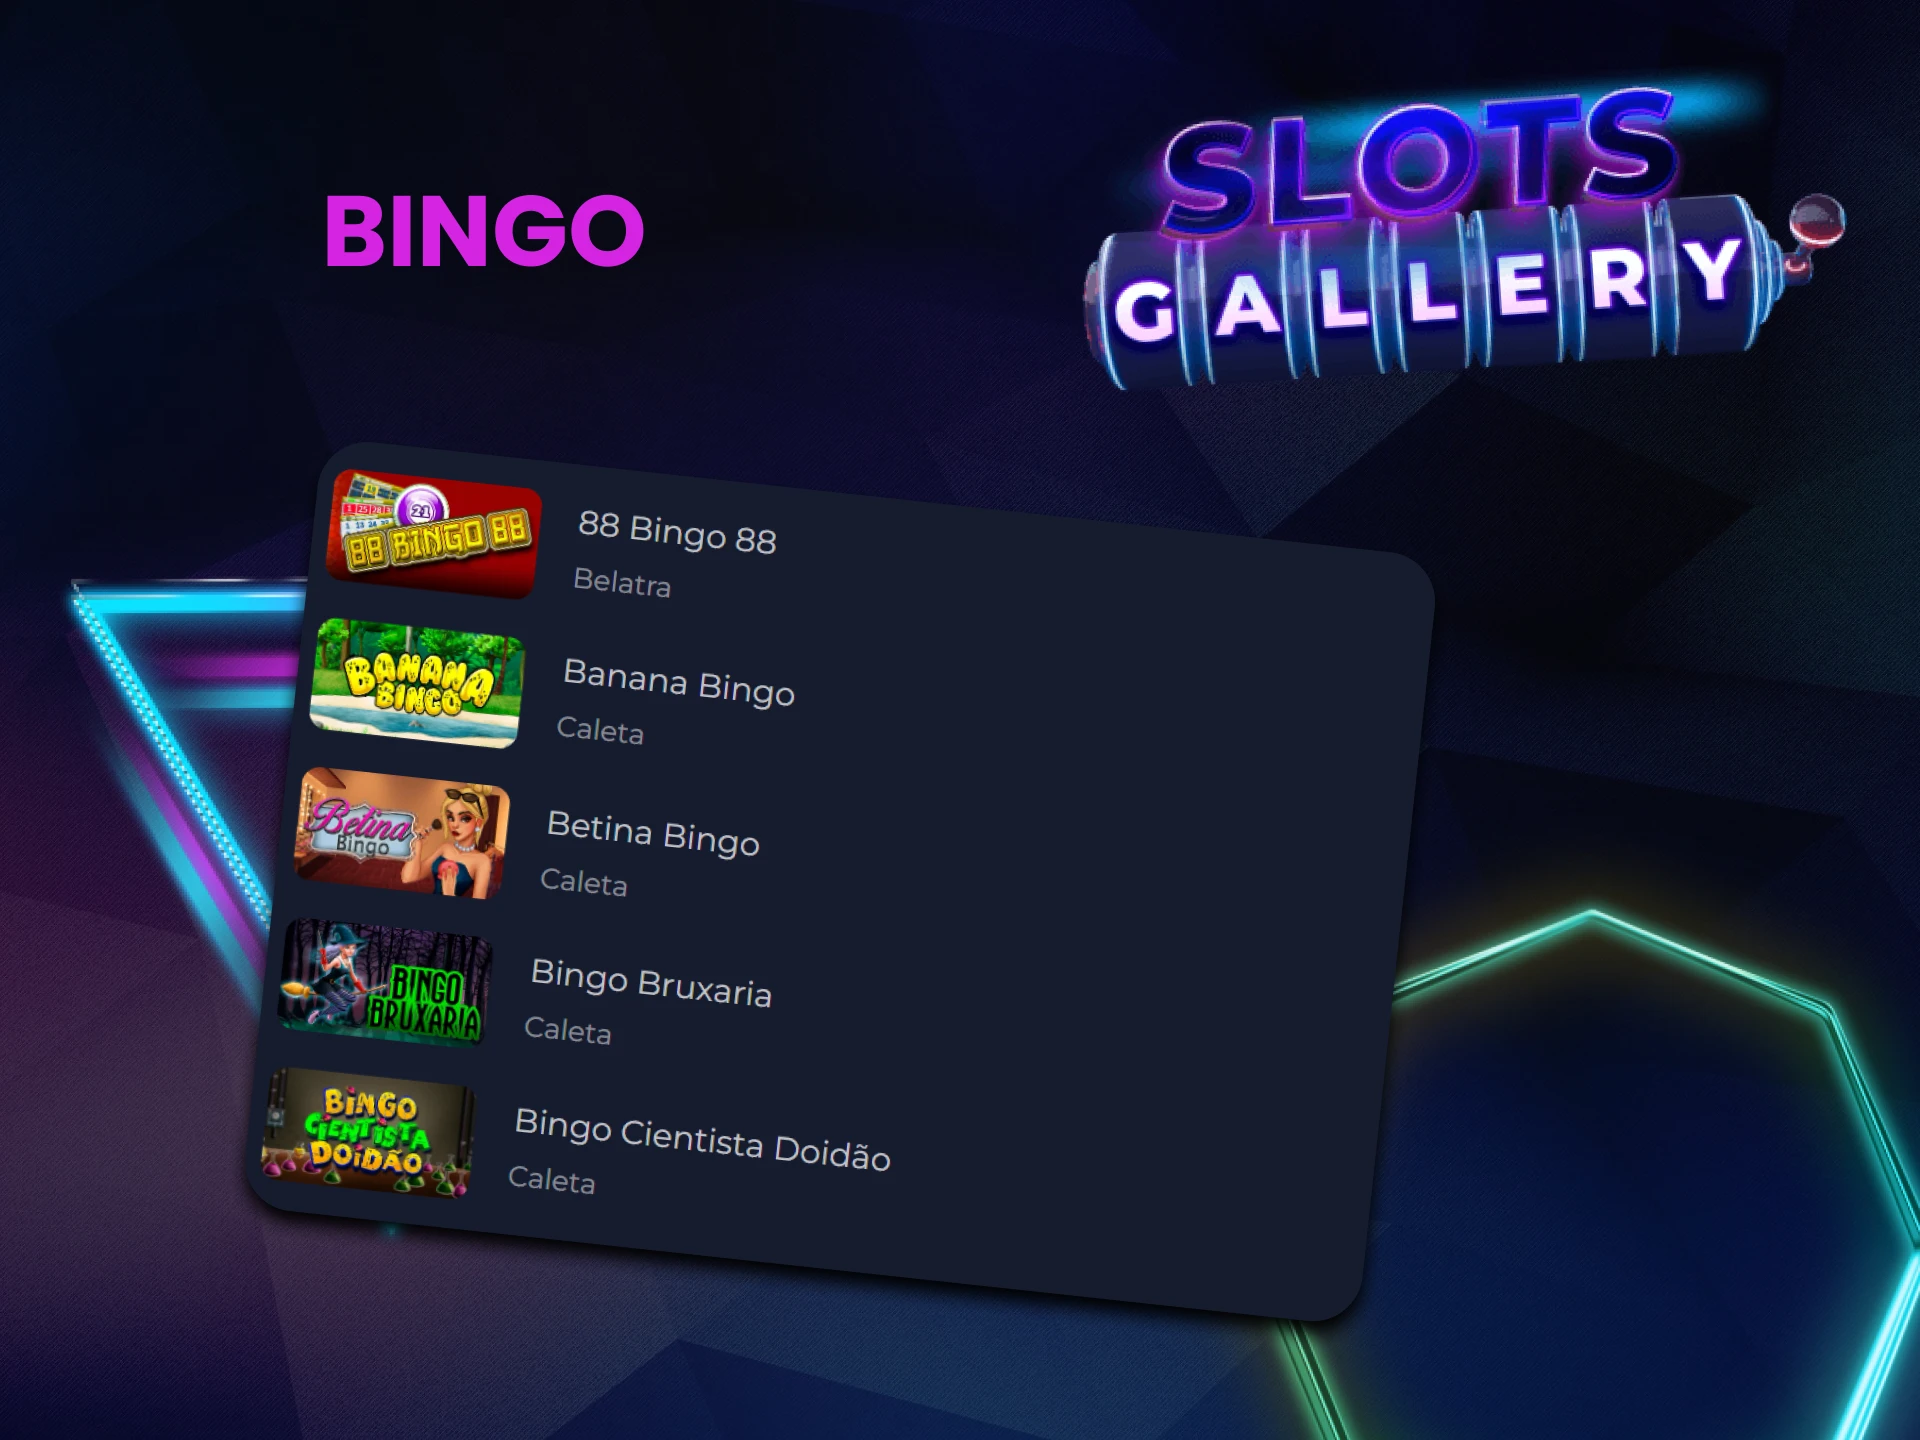 Play Bingo on the Slots Gallery website.